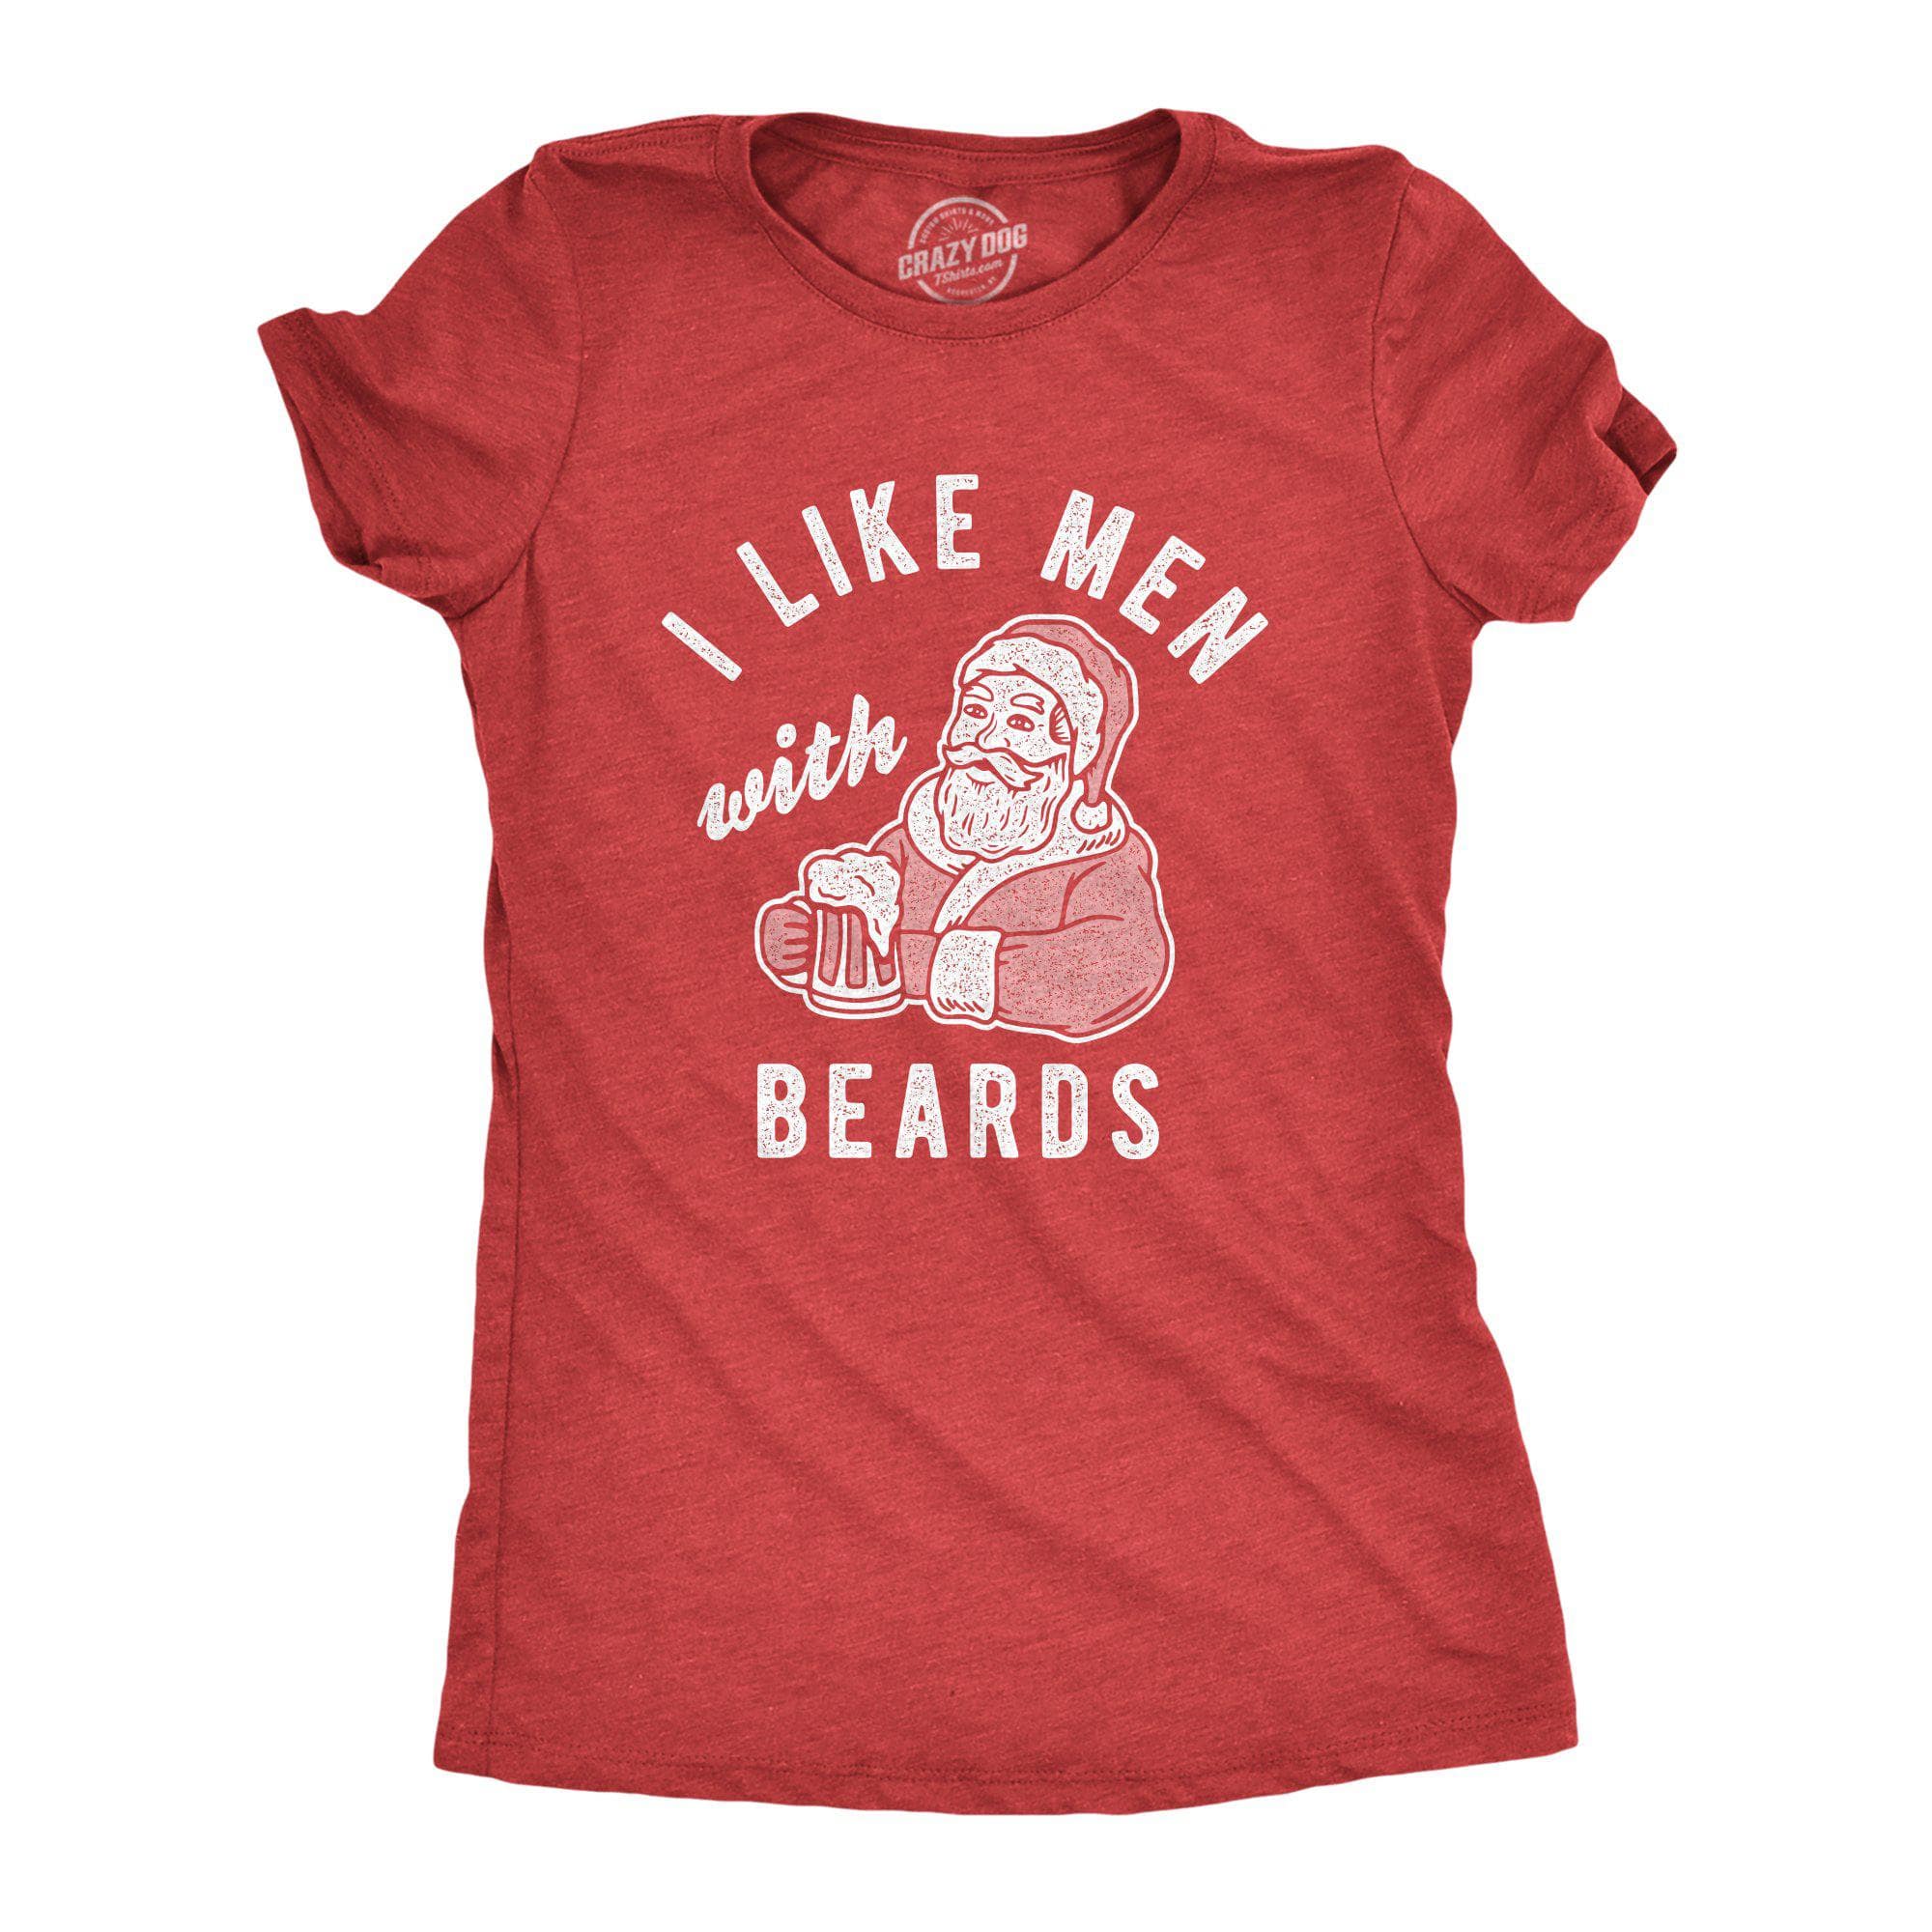 I Like Men With Beards Women's Tshirt - Crazy Dog T-Shirts